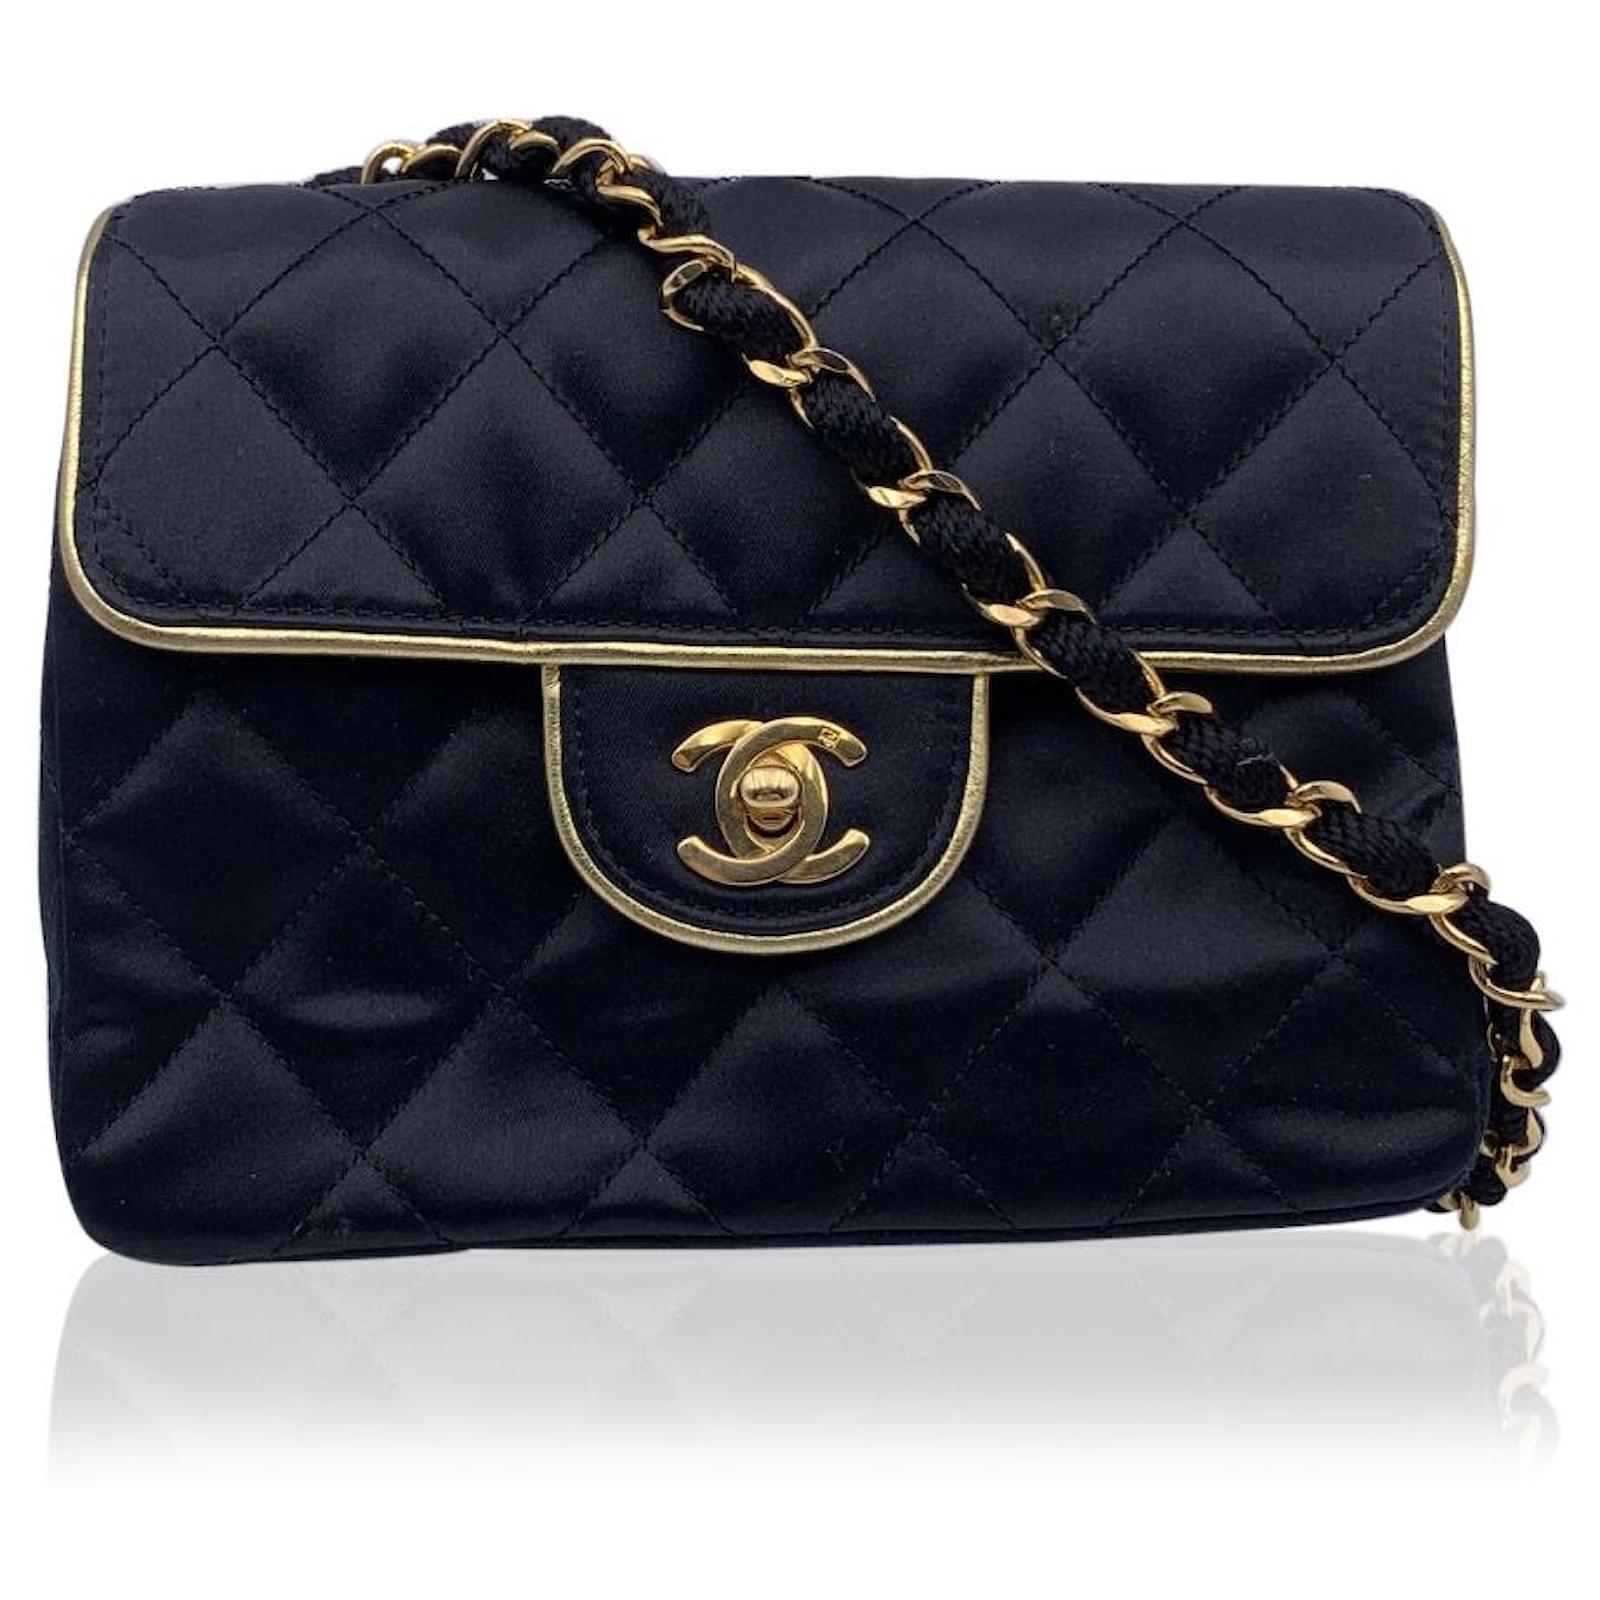 Chanel Satin Bag - 151 For Sale on 1stDibs